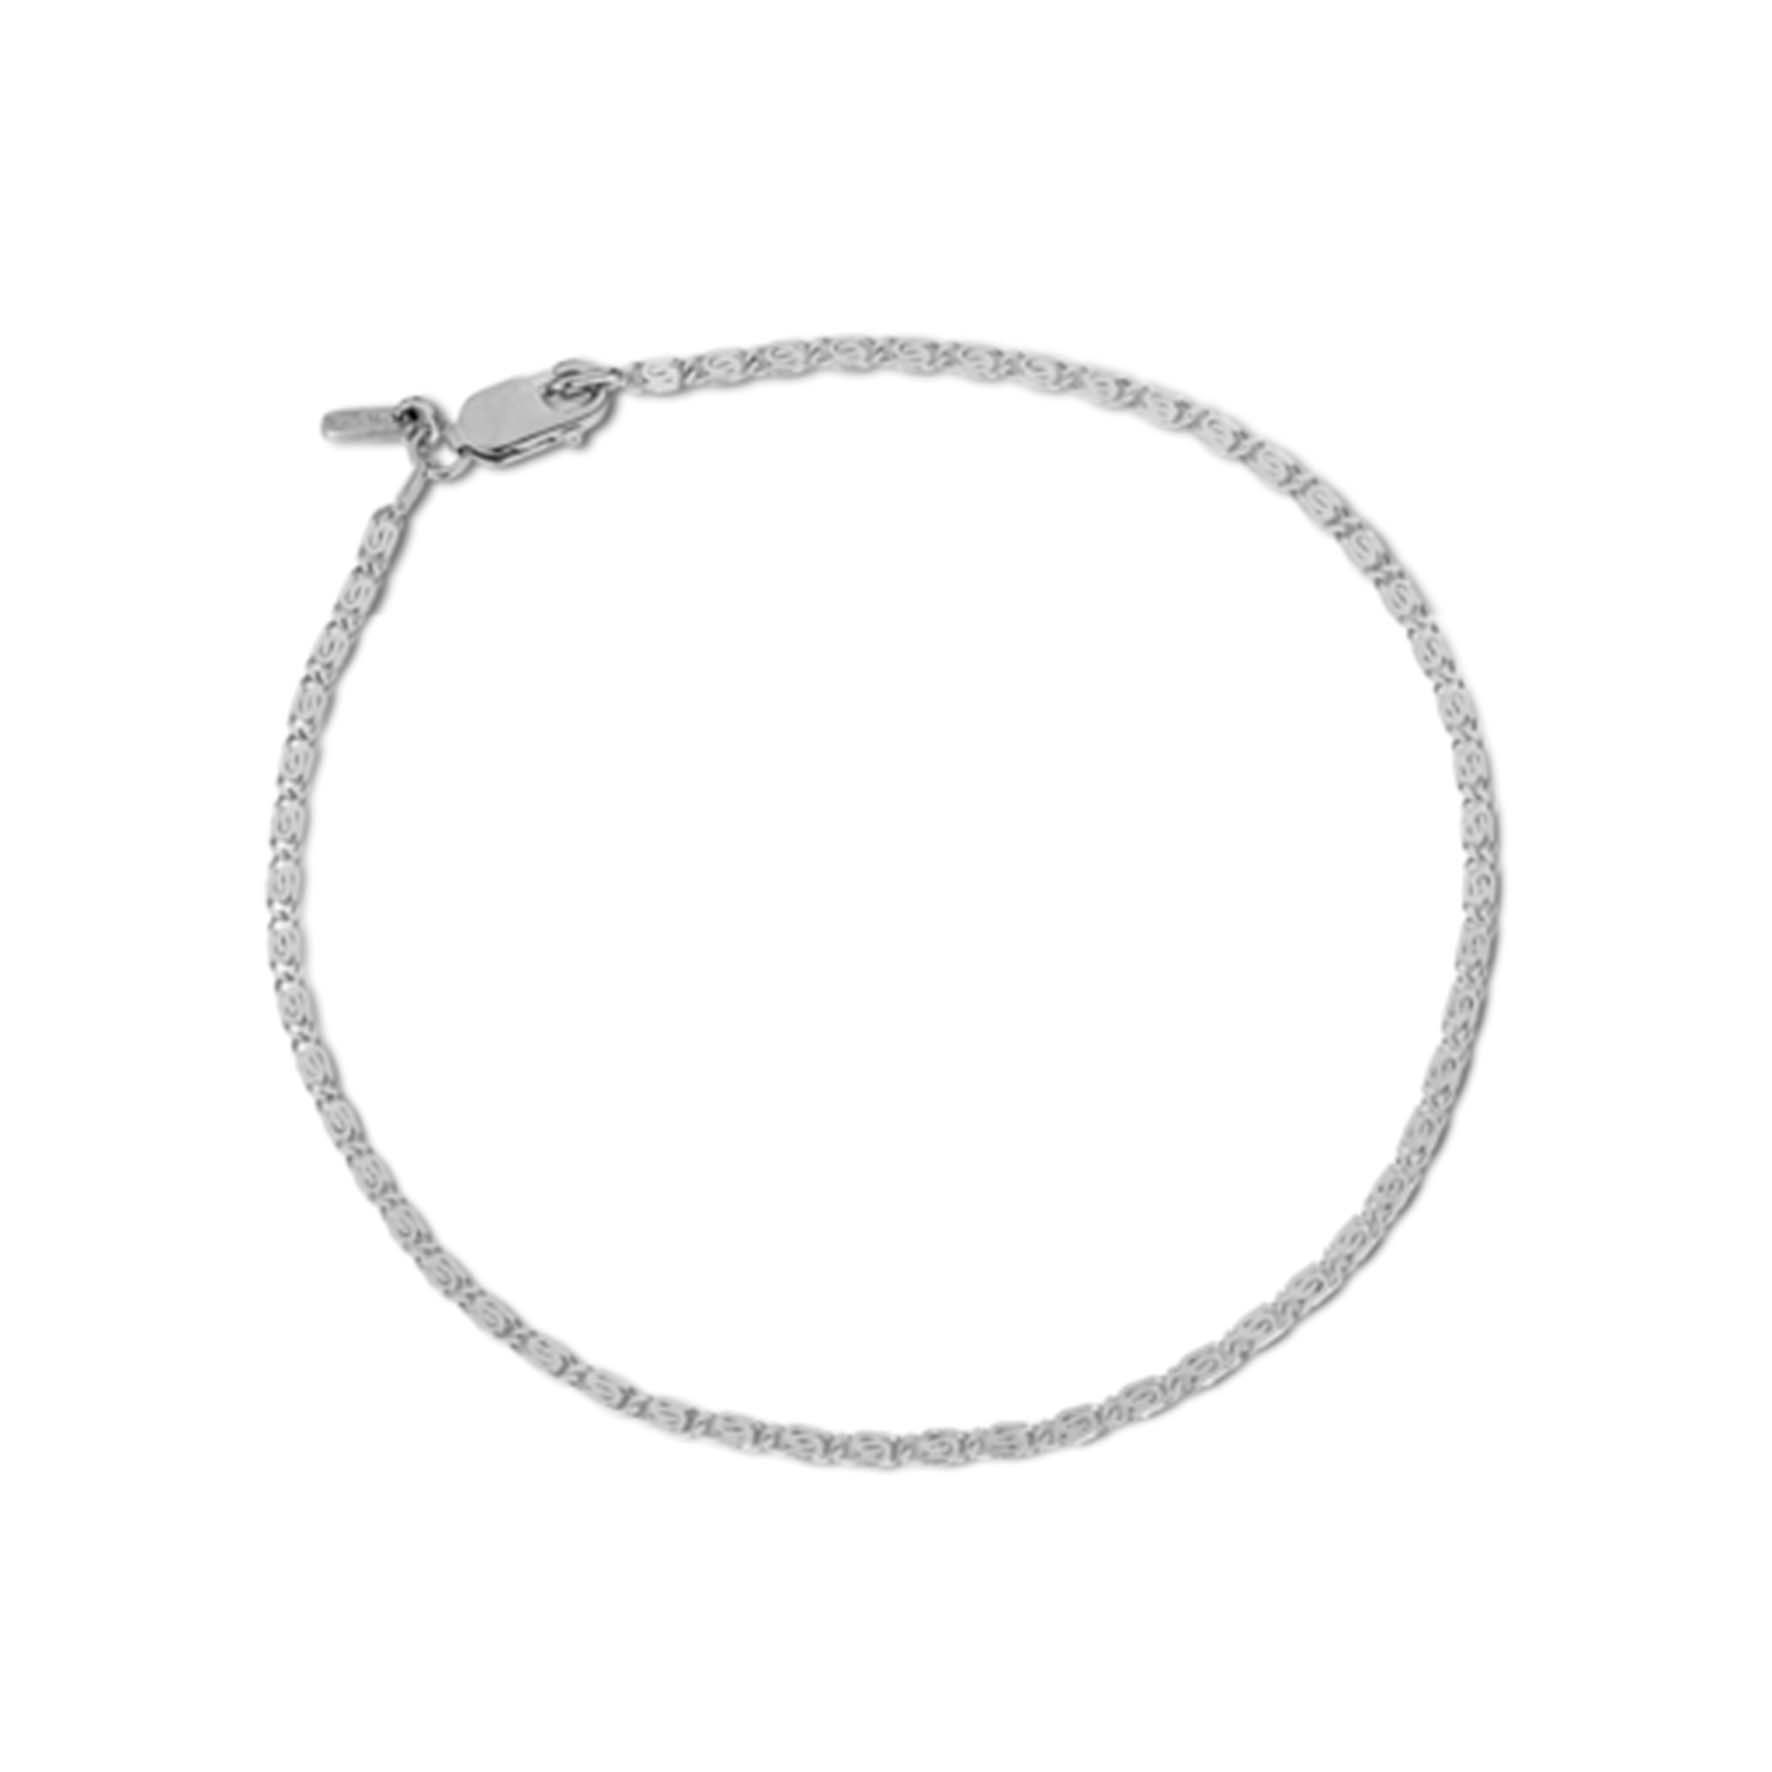 Envision Chain Bracelet from Jane Kønig in Silver Sterling 925